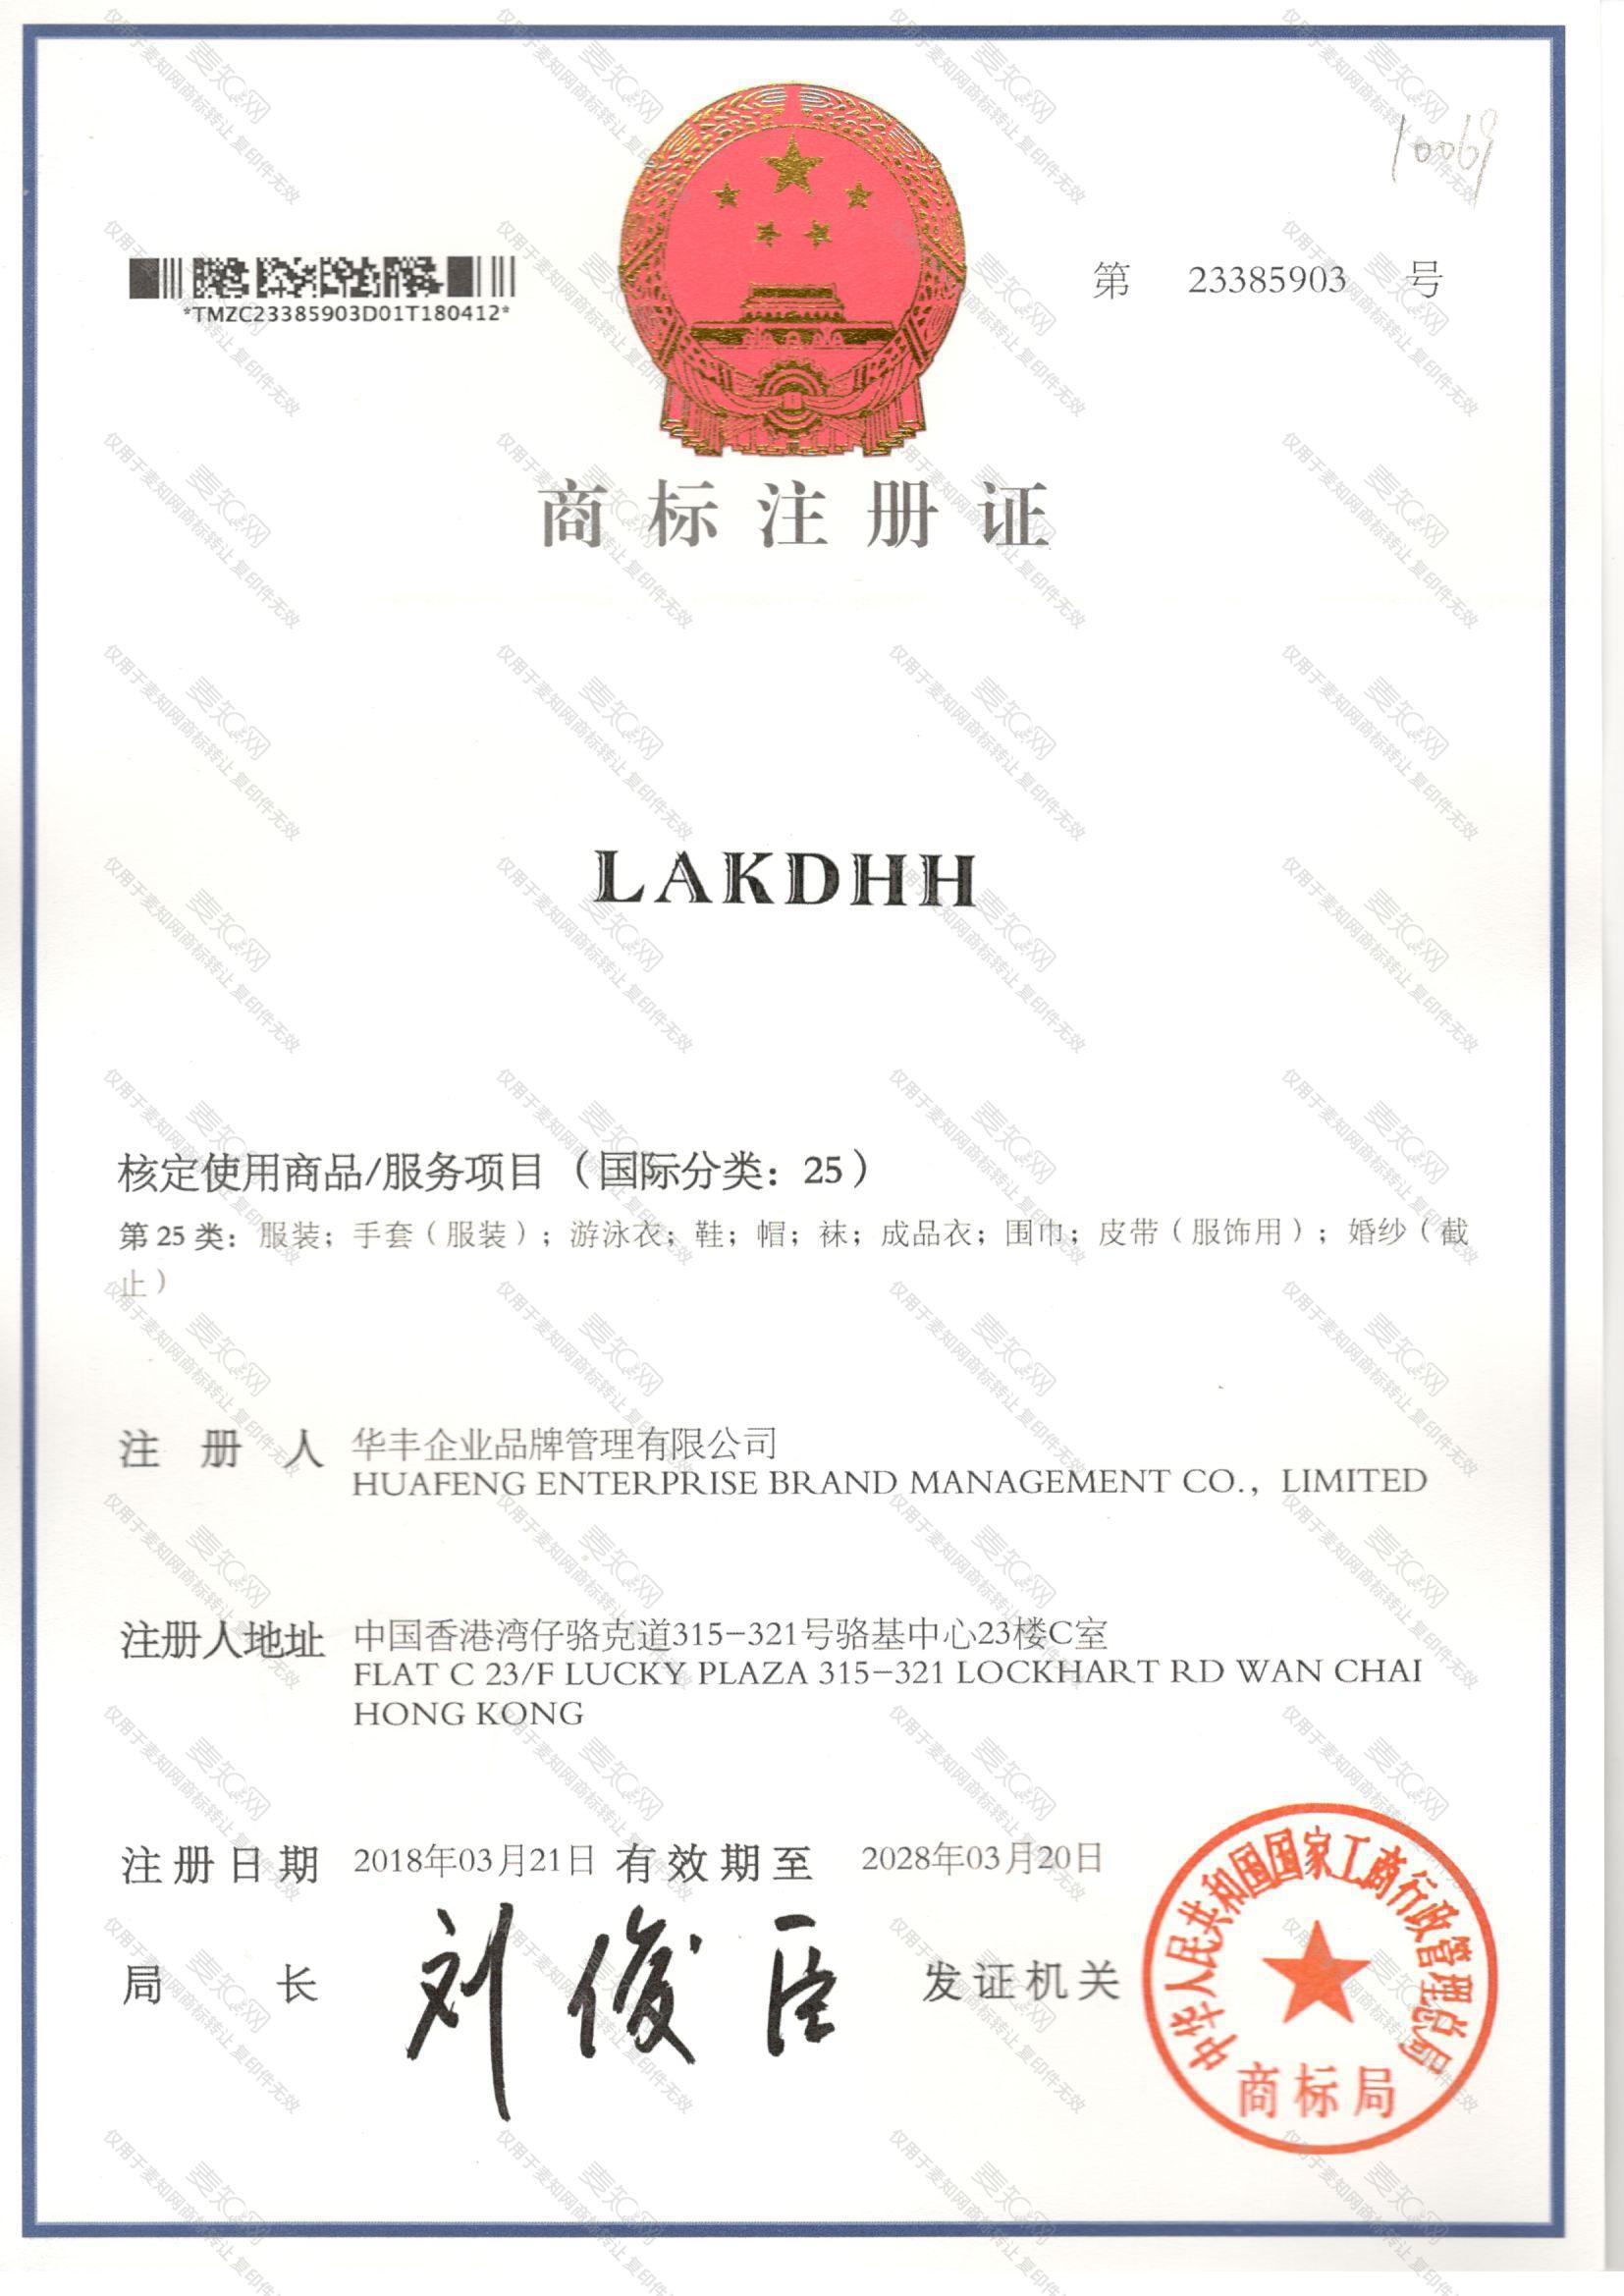 LAKDHH注册证